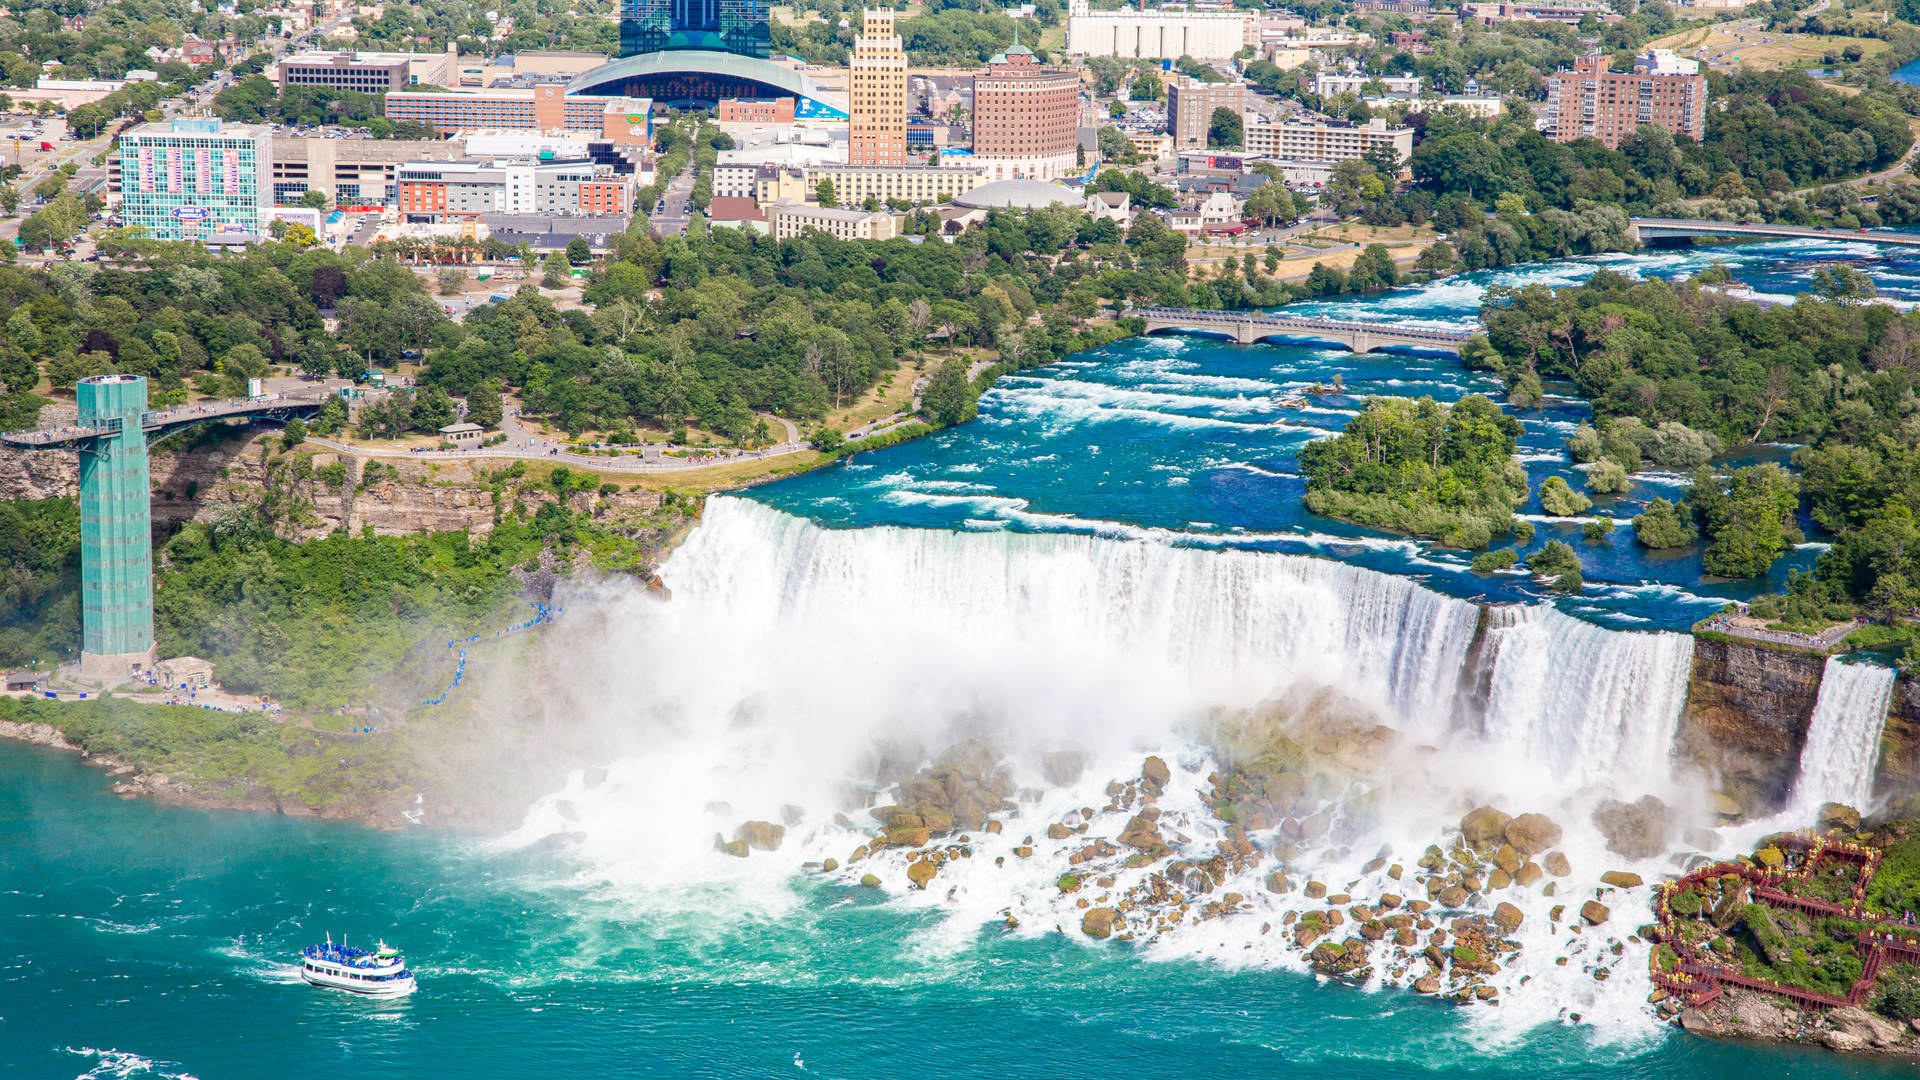 Niagara Falls 5747X3233 Wallpaper and Background Image